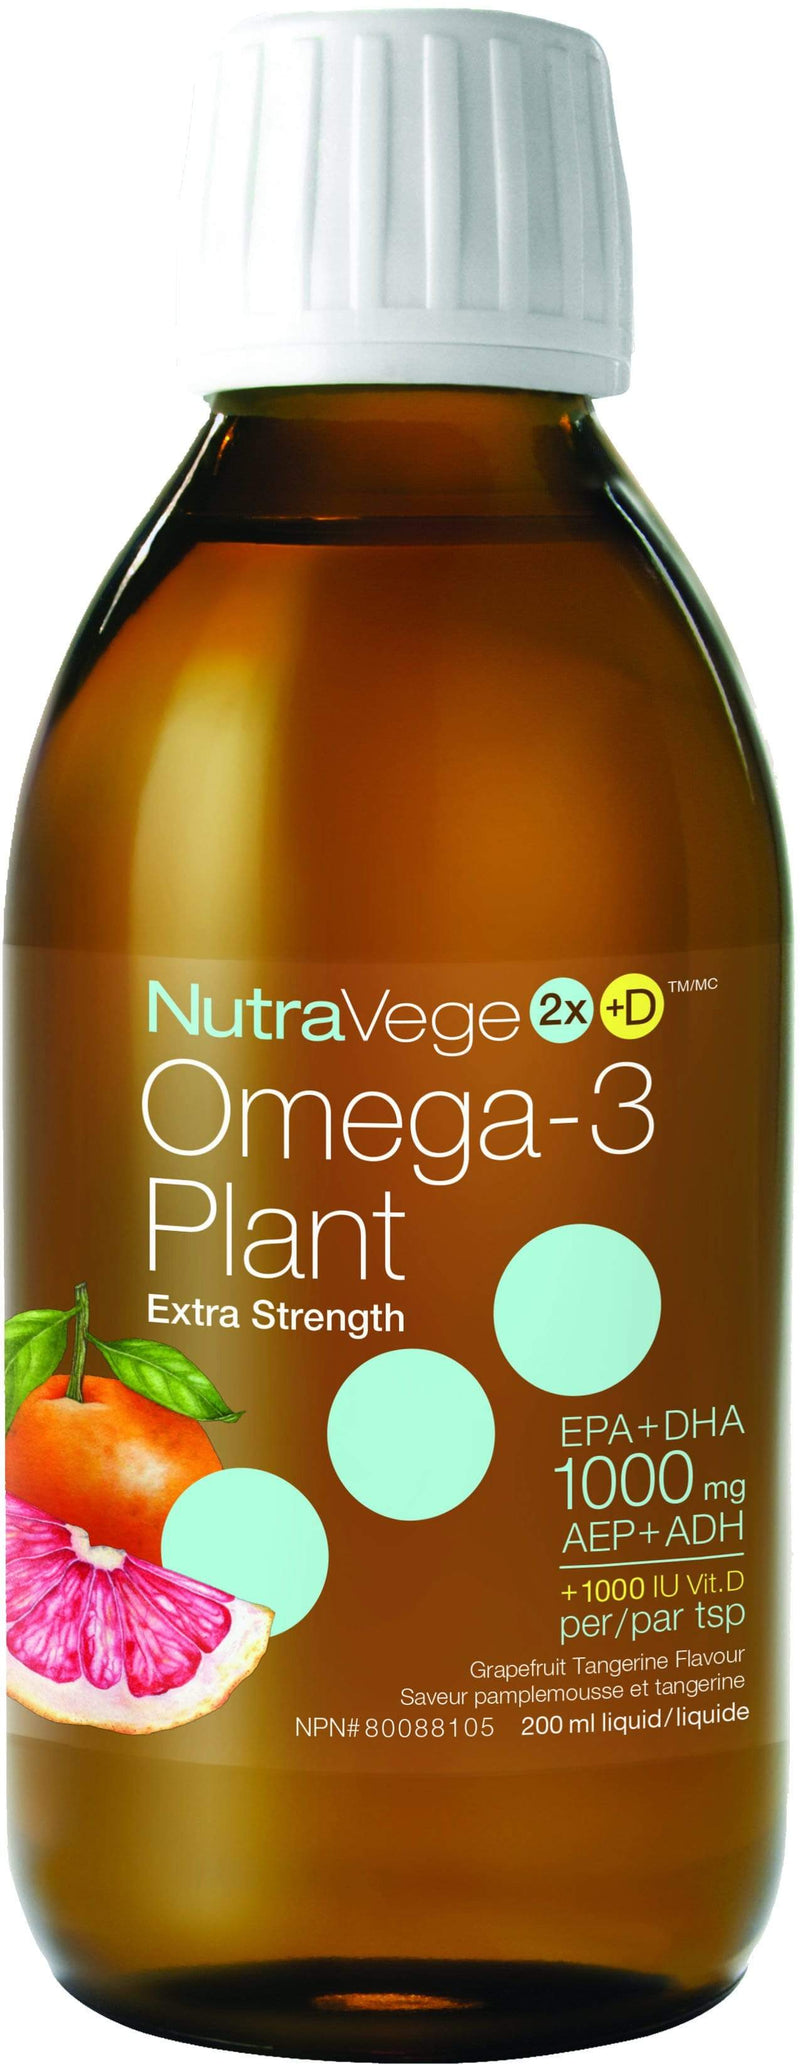 NutraVege2x+D Omega-3 + Vitamin D Plant Extra Strength - Grapefruit Tangerine (200 ml)